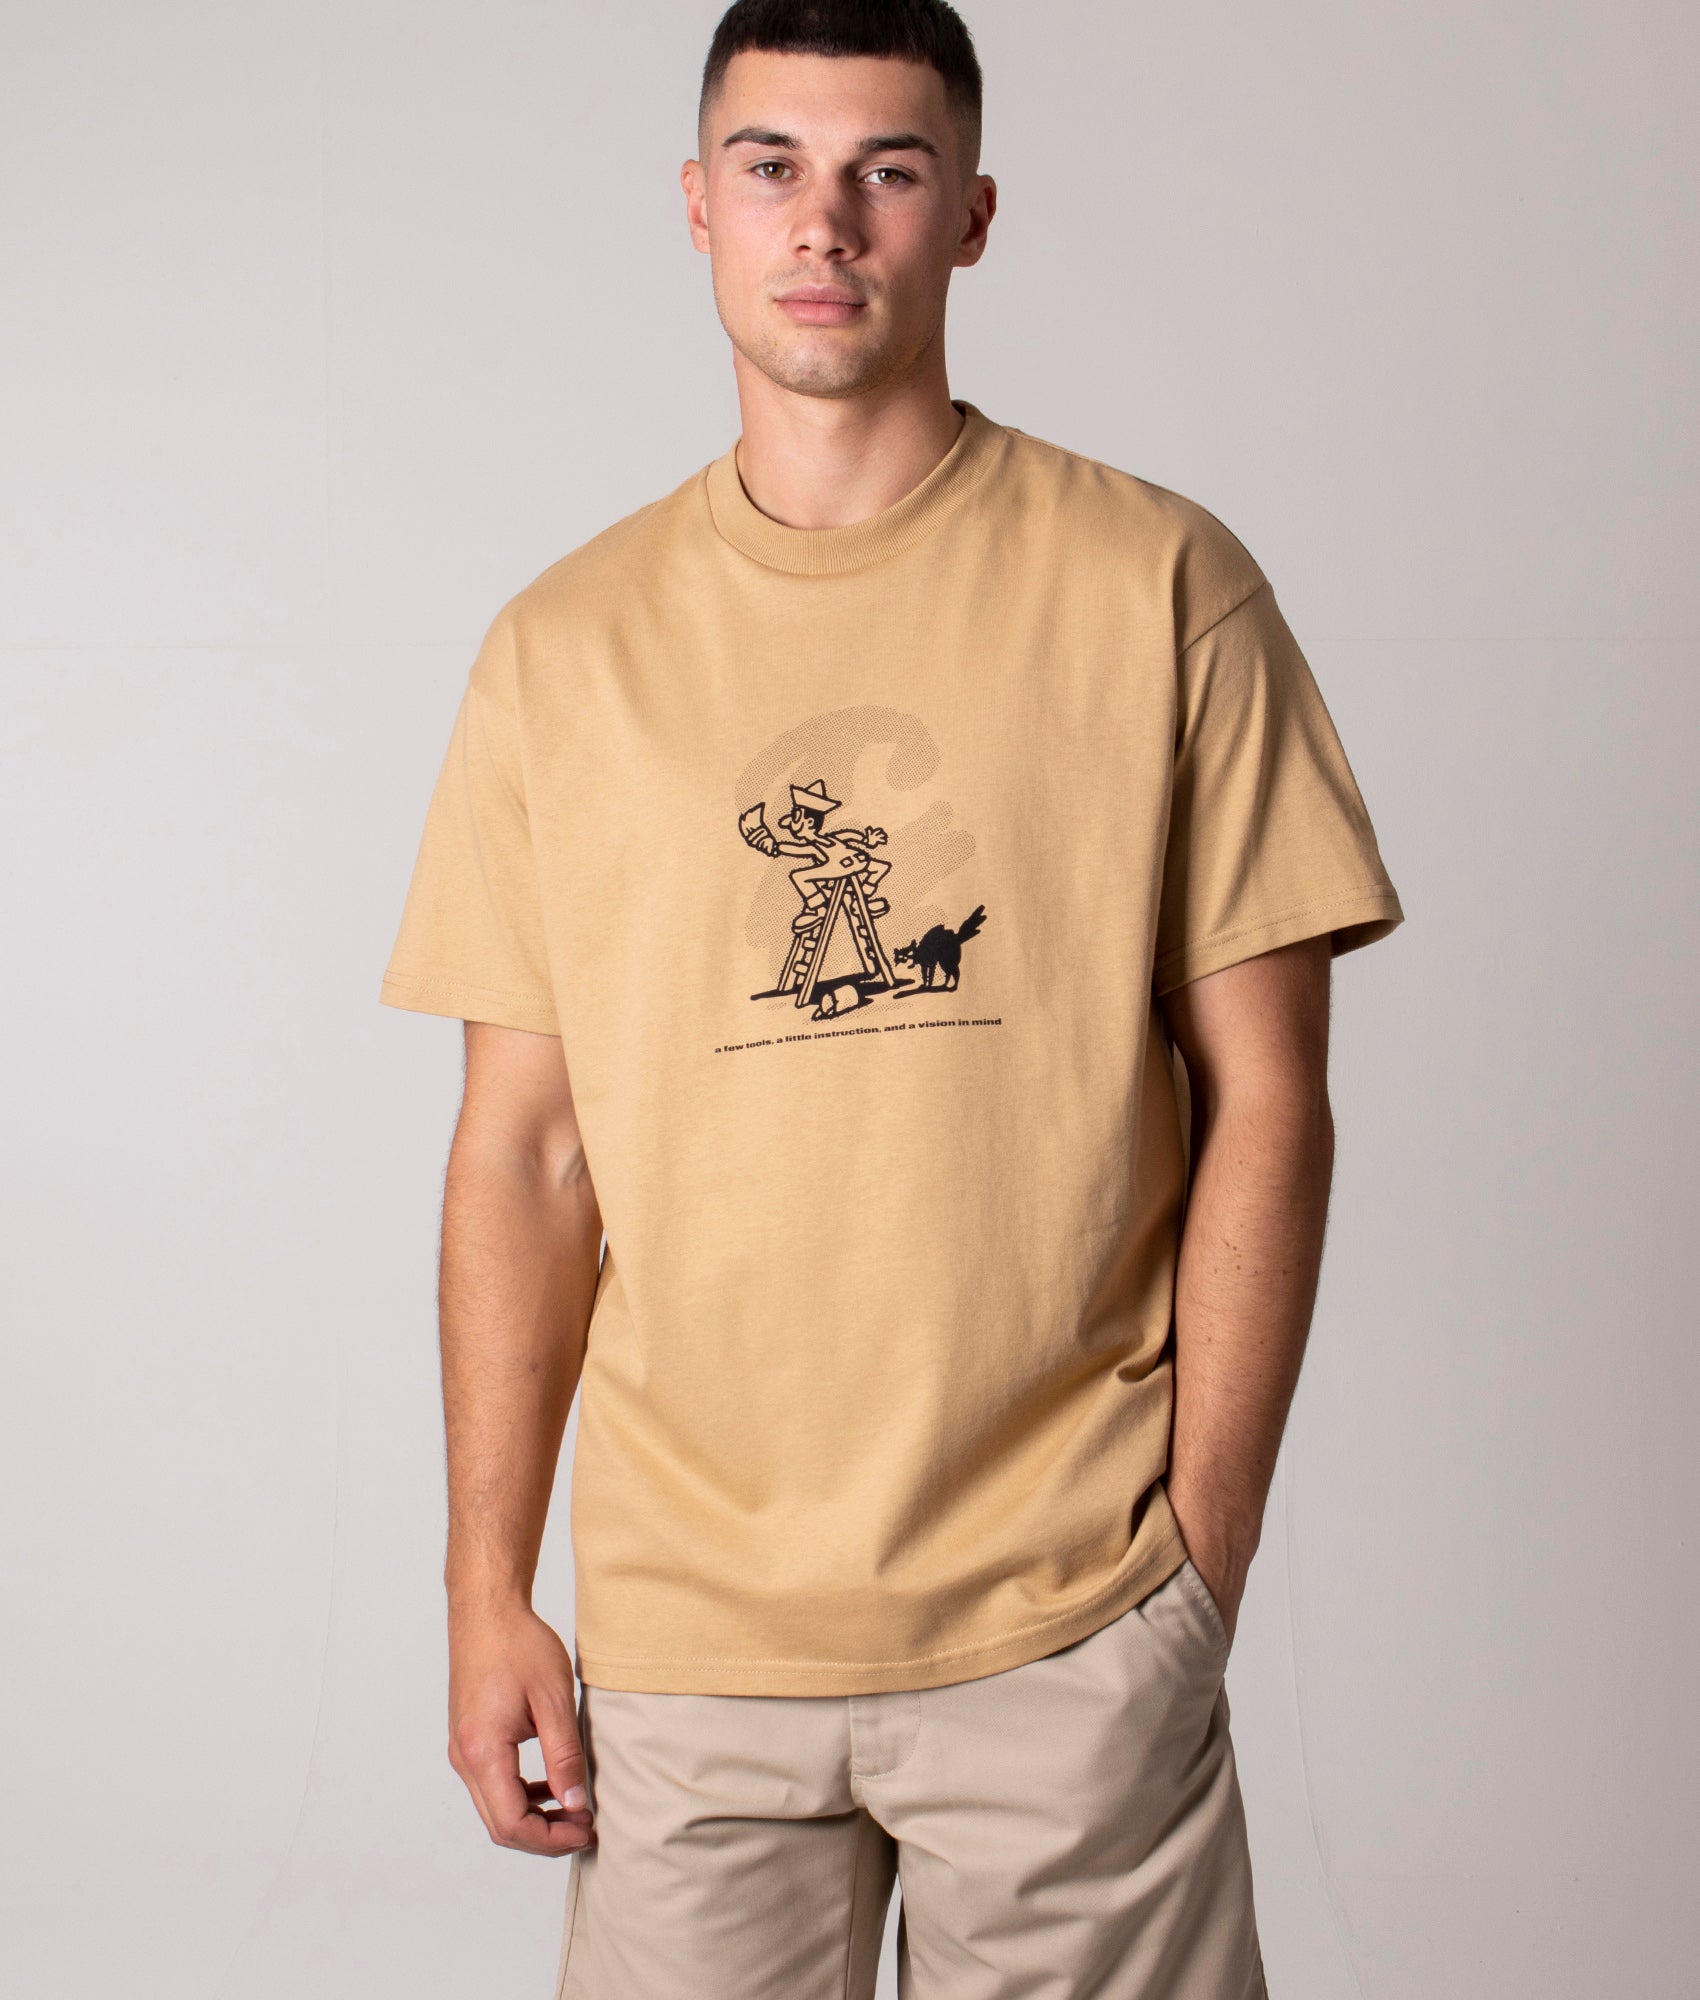 Carhartt WIP Goods T-shirt in brown